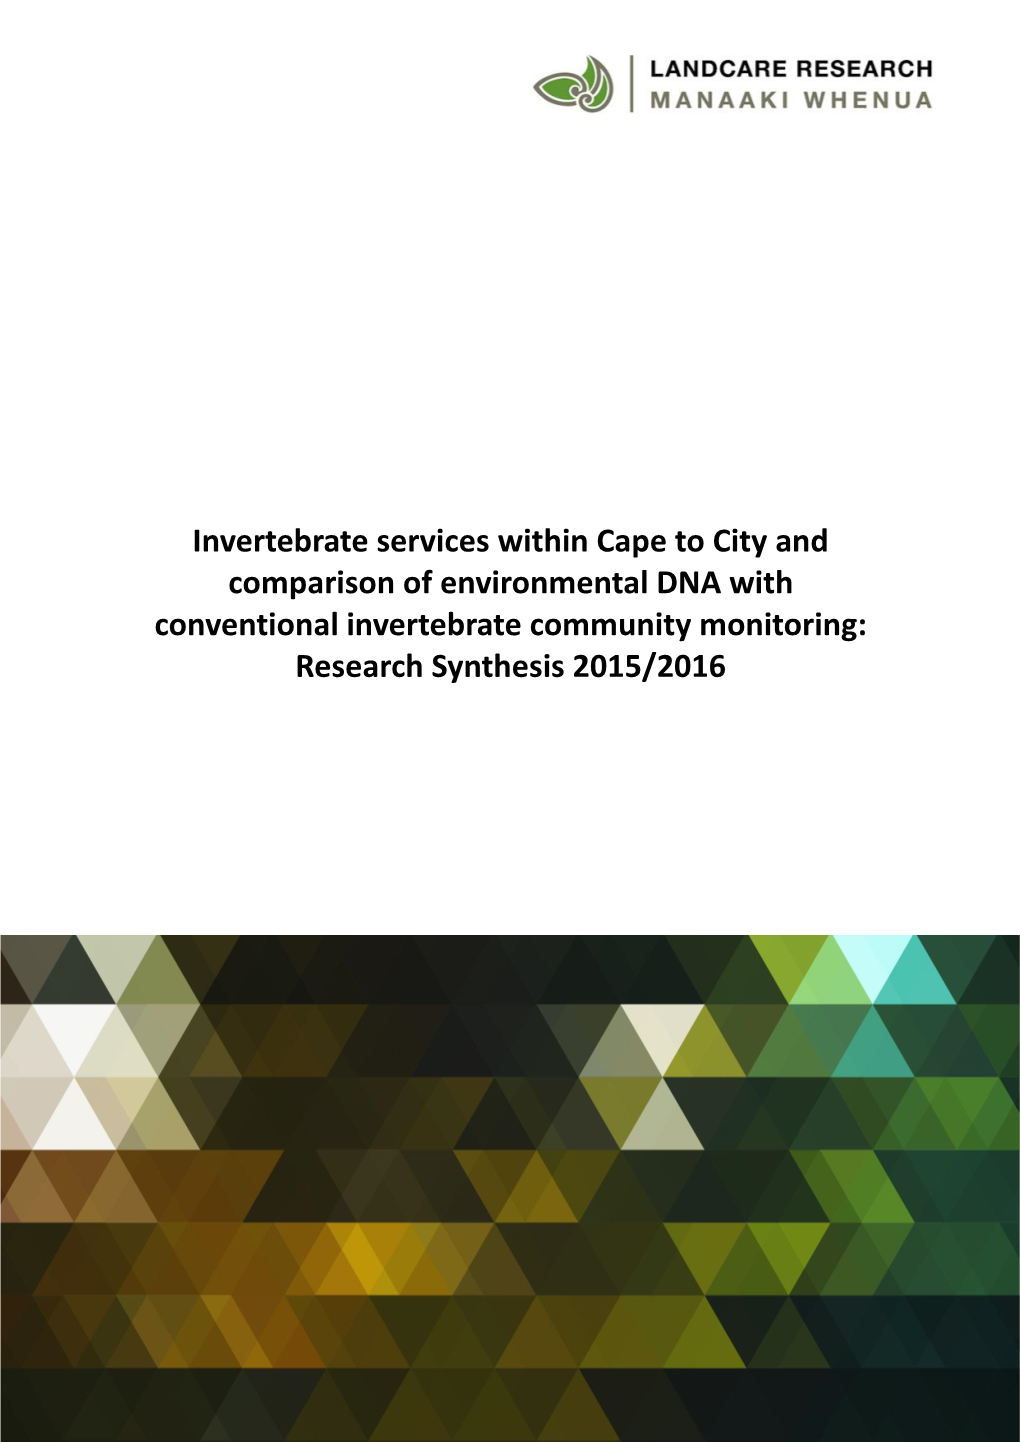 Invertebrate Species Services Within Cape